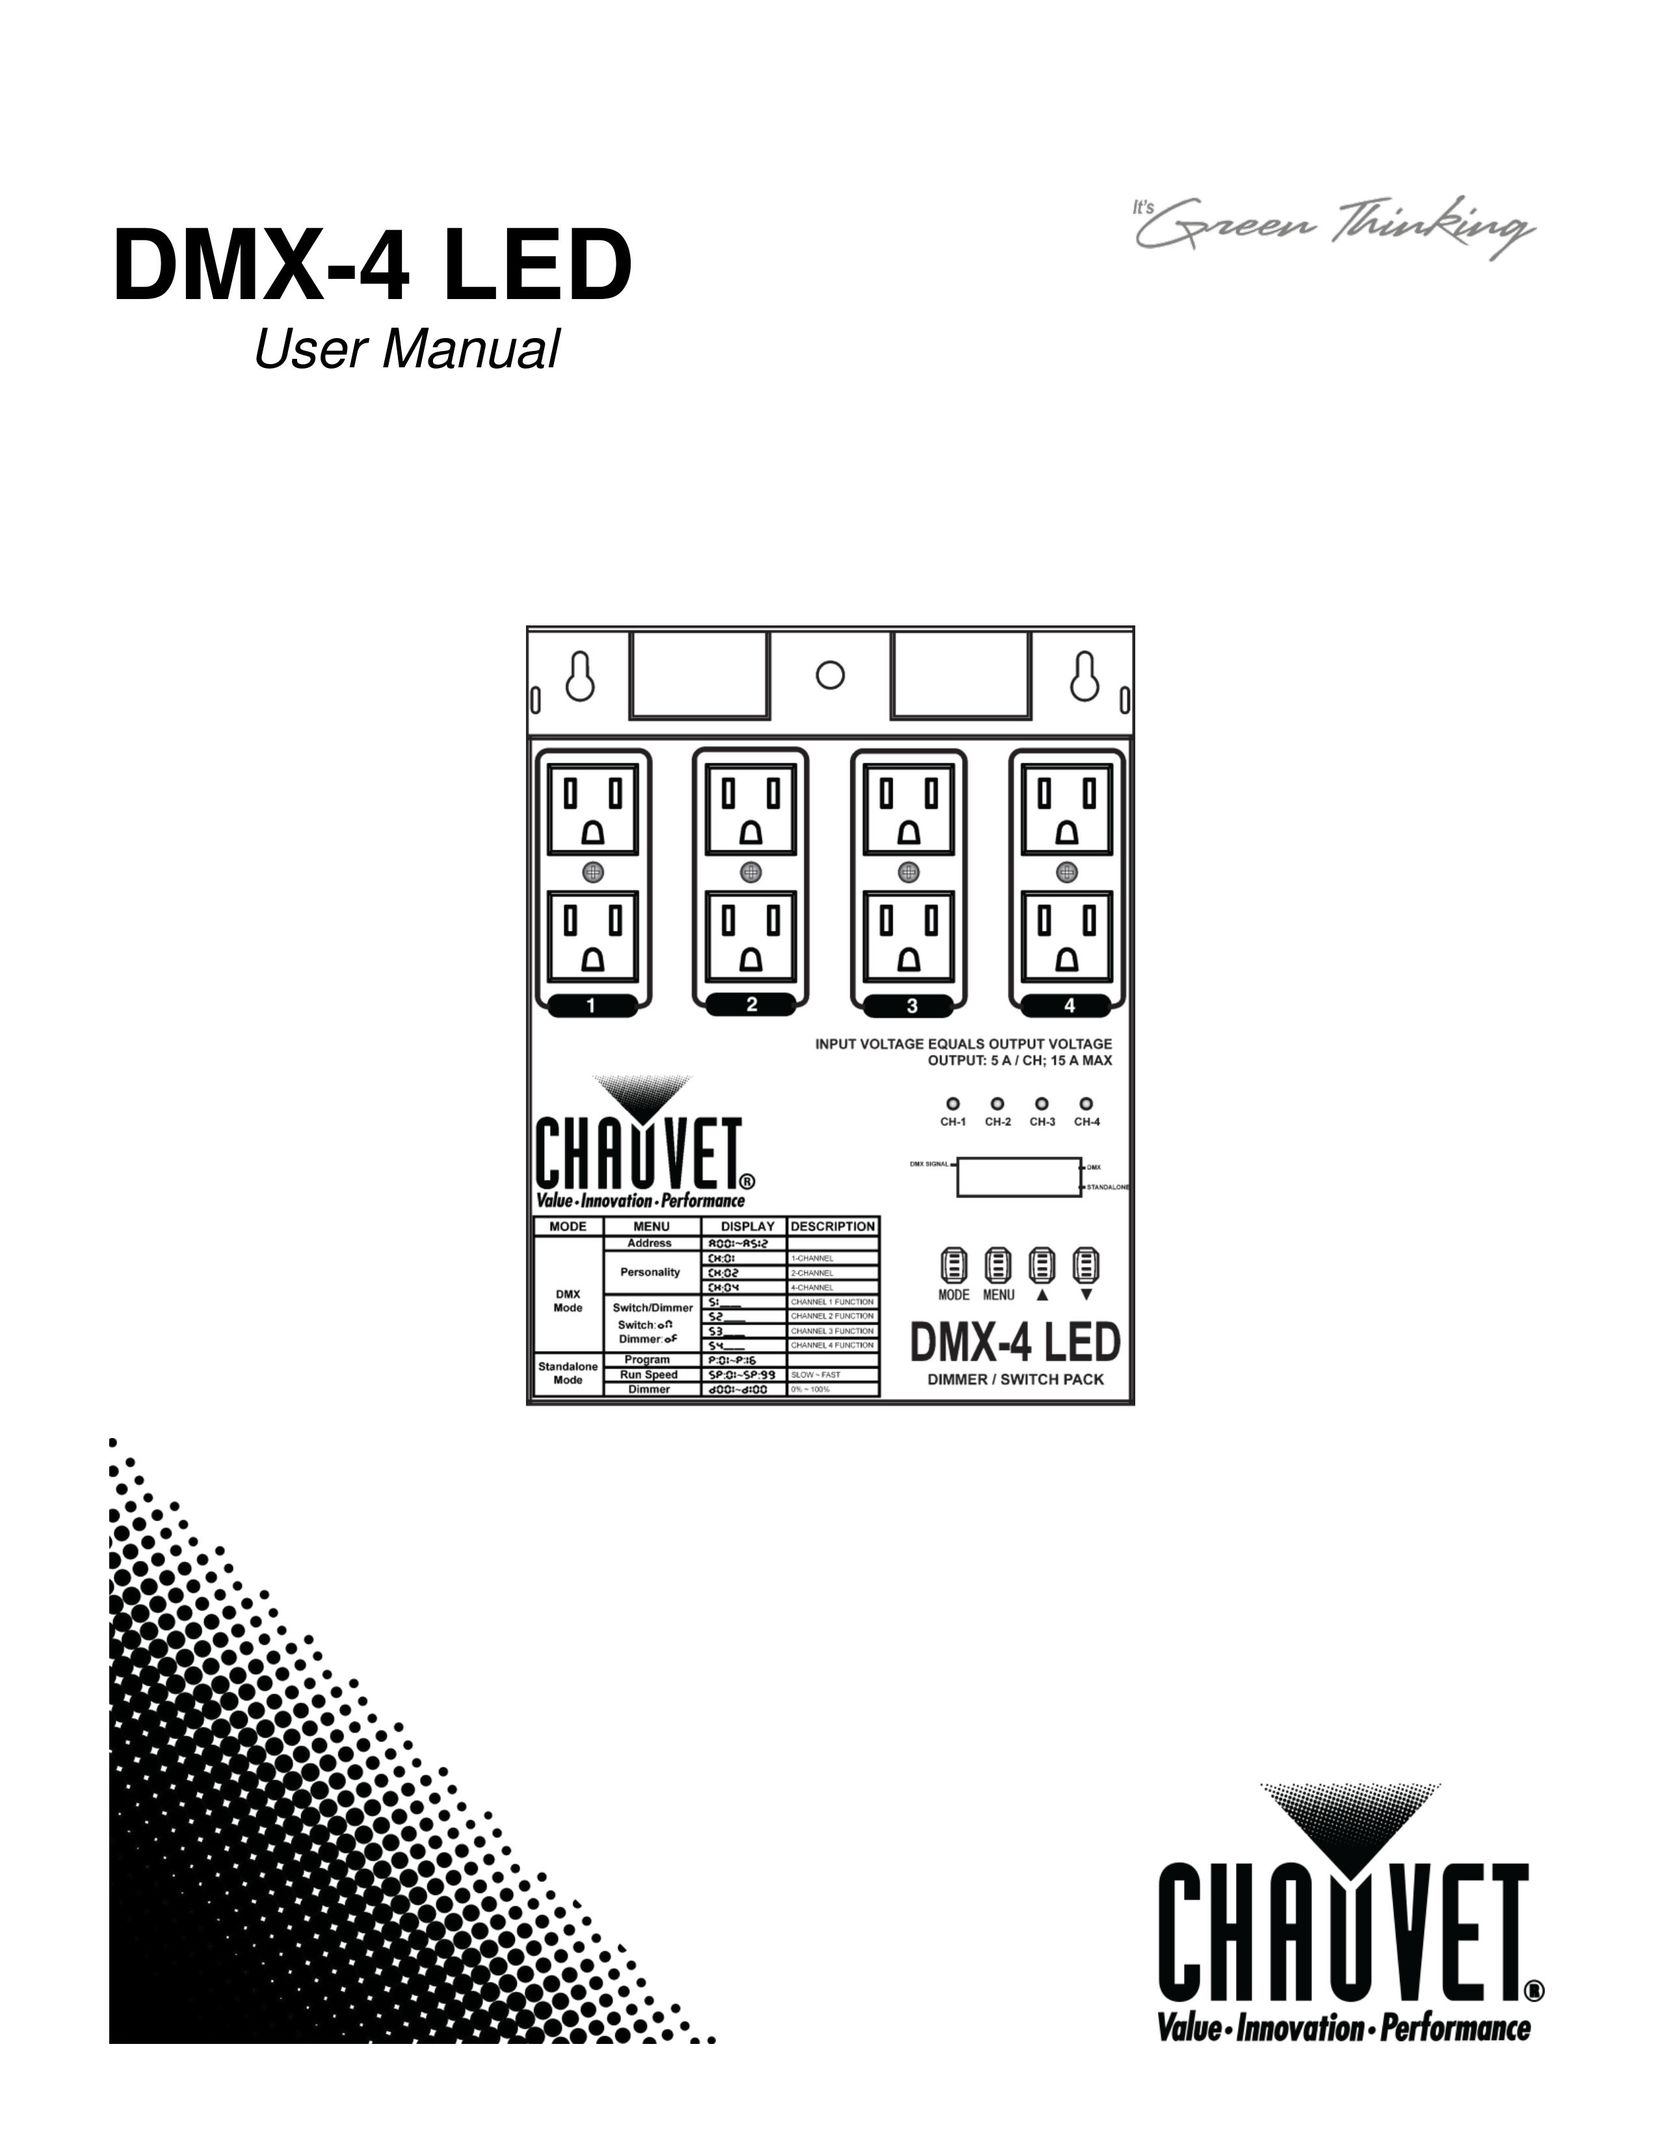 Chauvet DMX-4 LED Surge Protector User Manual